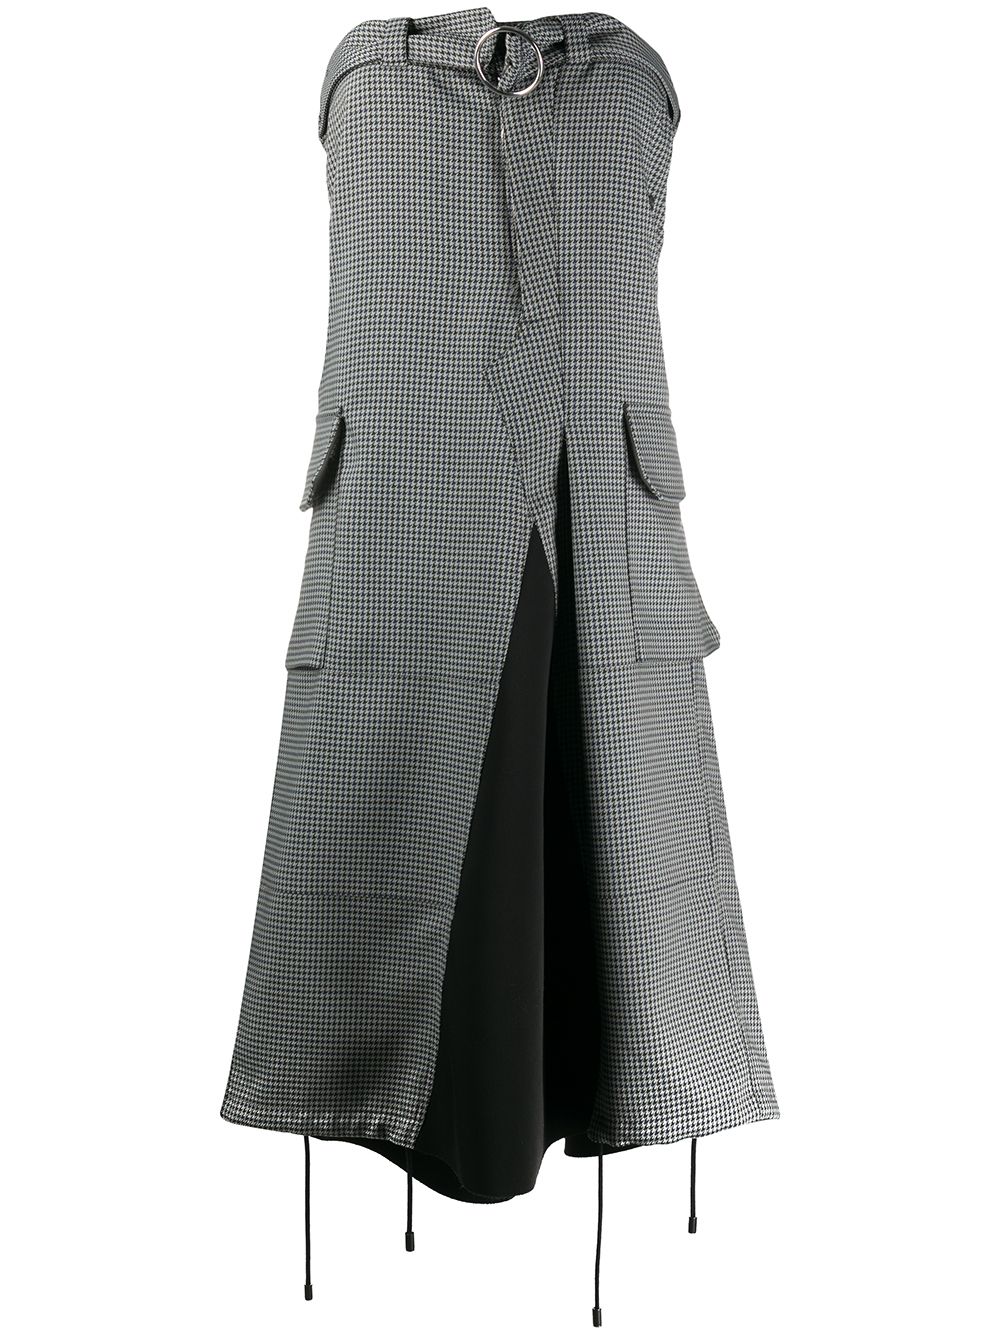 Image 1 of Maison Margiela deconstructed trouser-style strapless dress